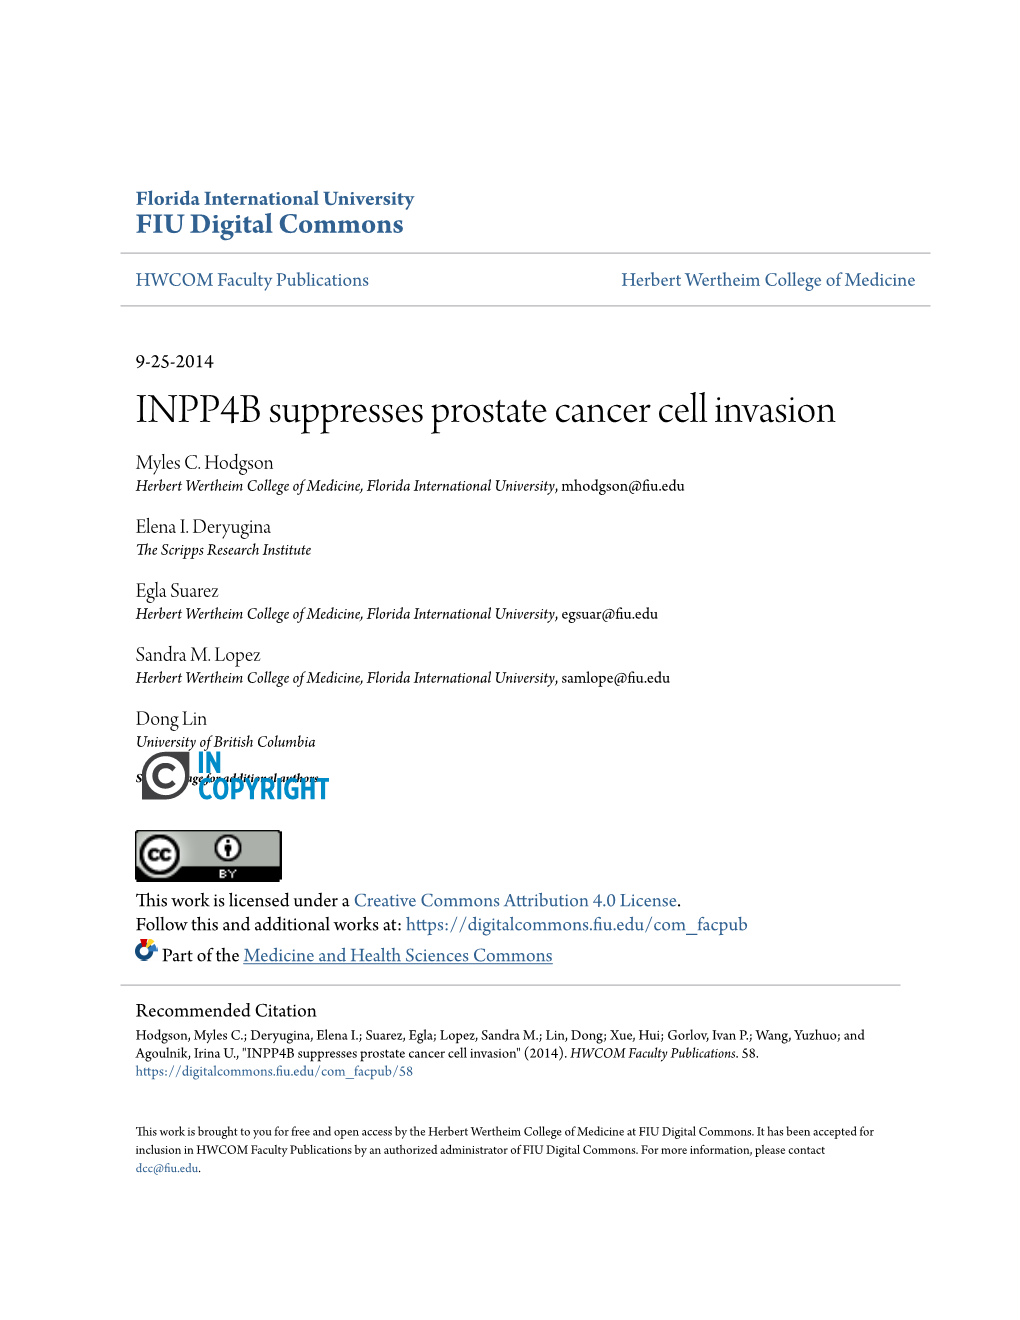 INPP4B Suppresses Prostate Cancer Cell Invasion Myles C